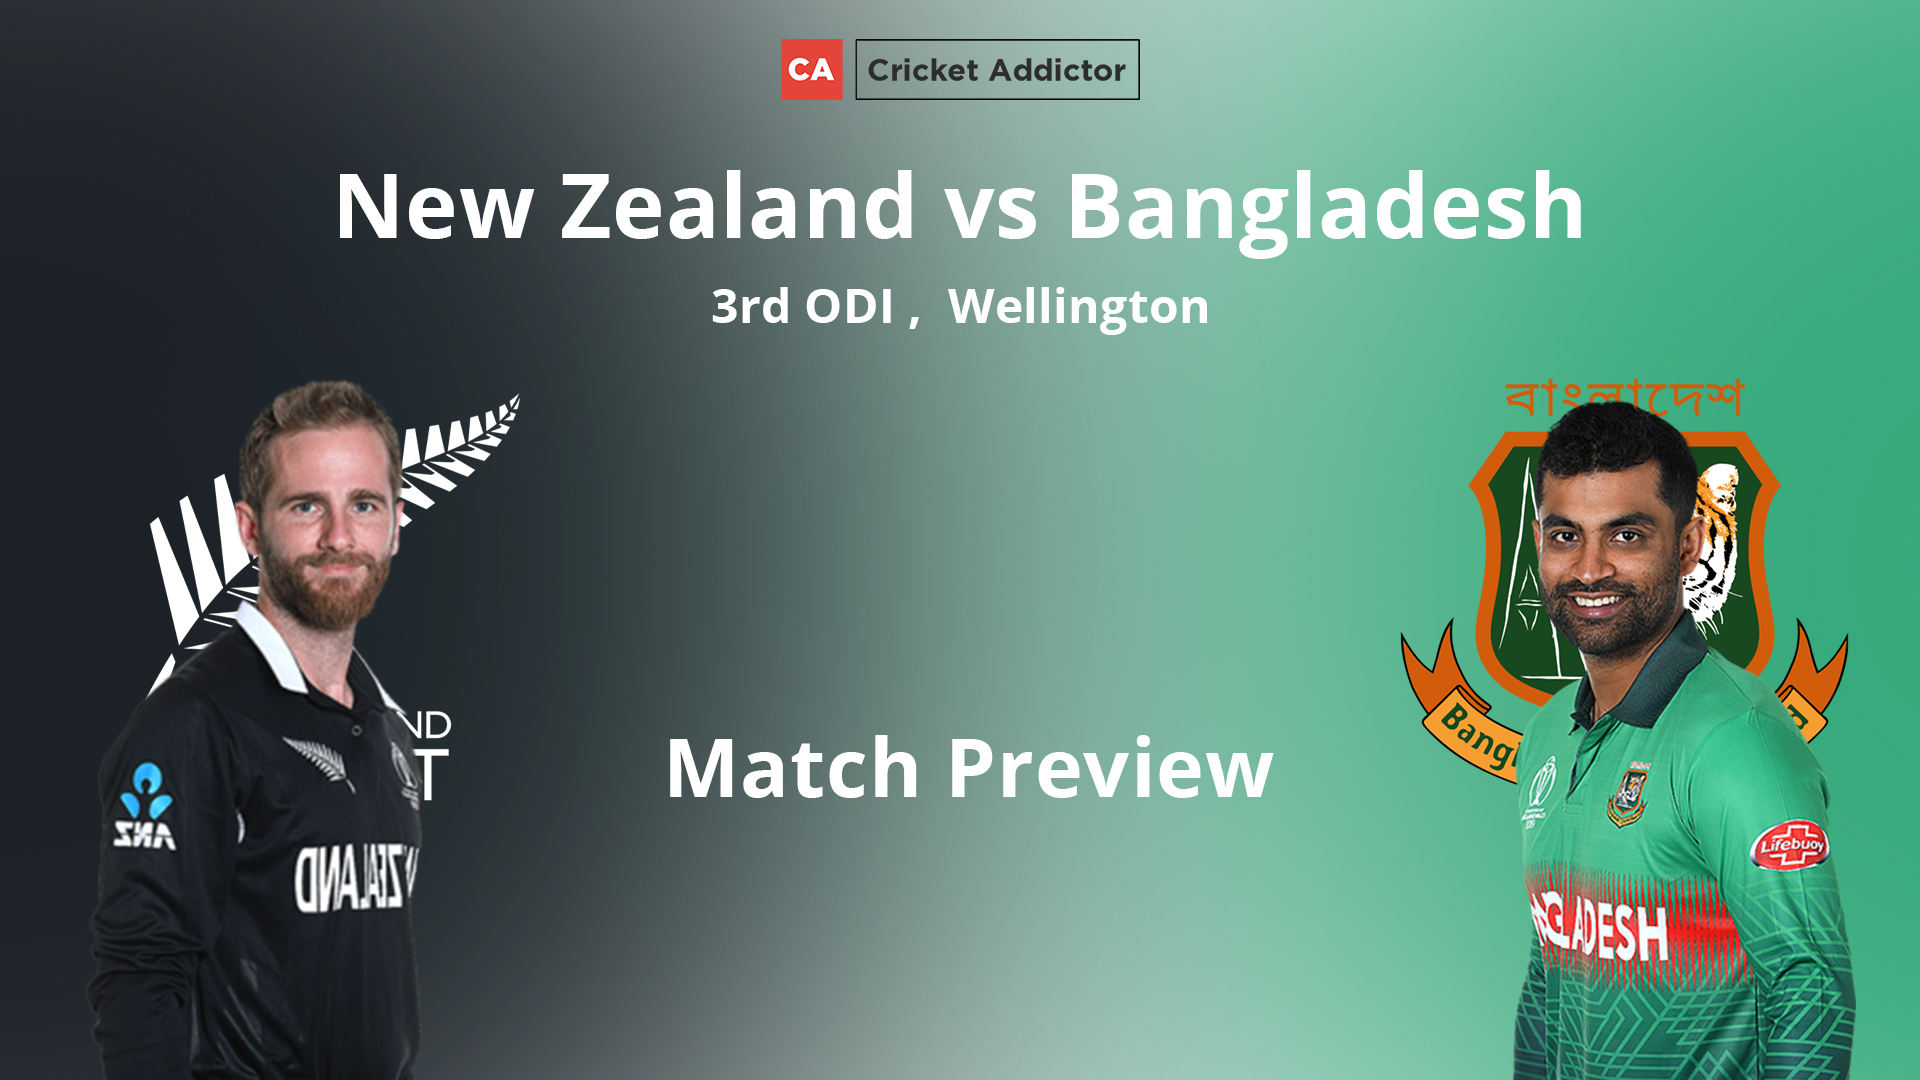 New Zealand vs Bangladesh 2021, 3rd ODI: Match Preview And Prediction